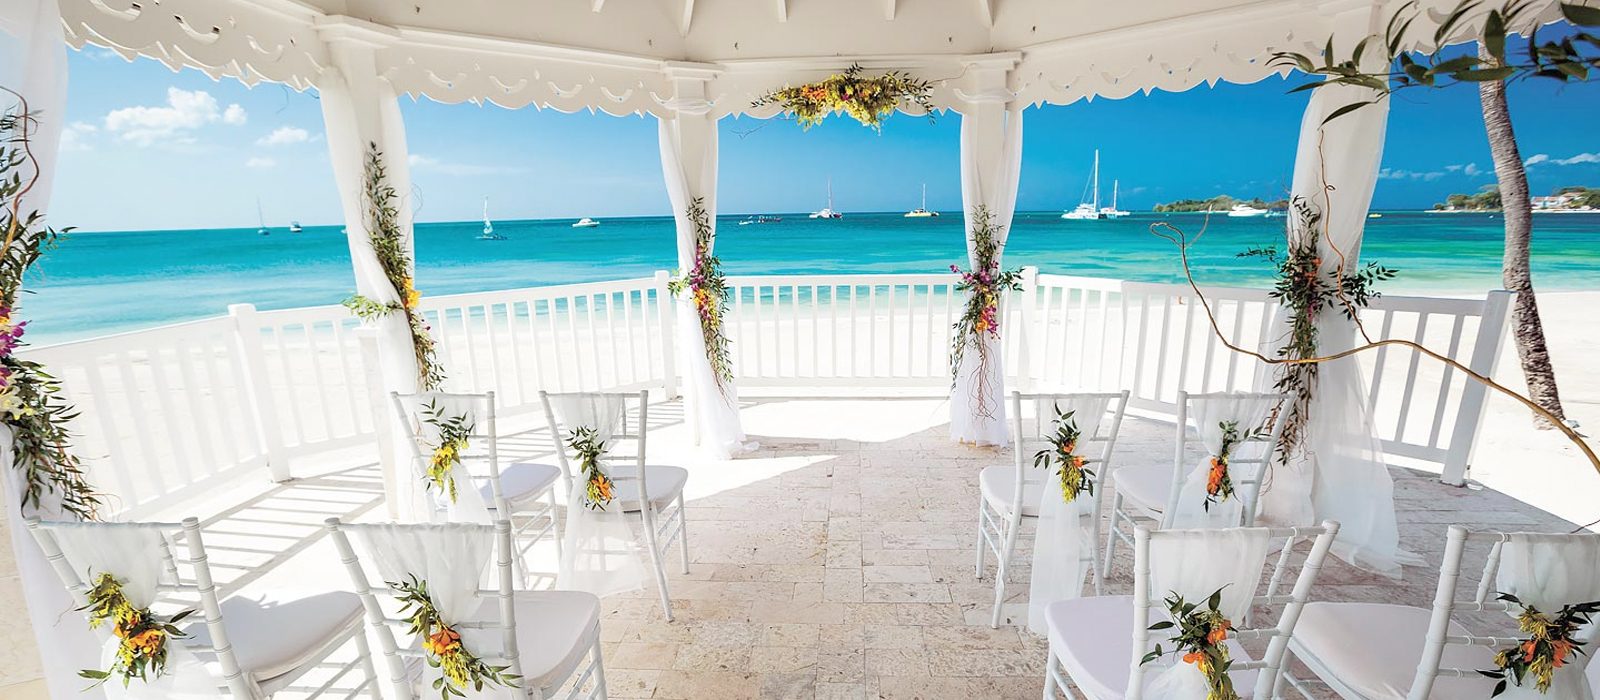 Beach Weddings Abroad Sandals Negril Header